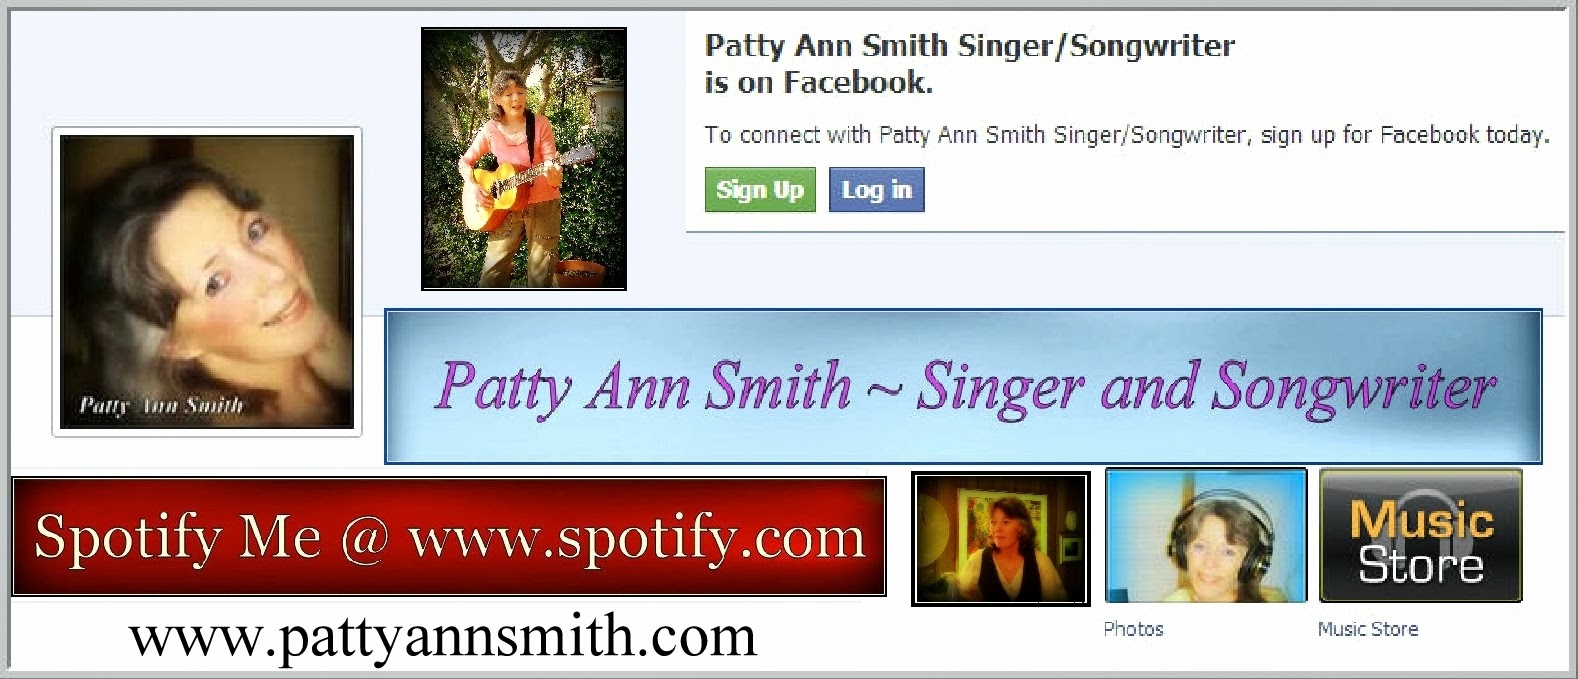 Patty on Facebook